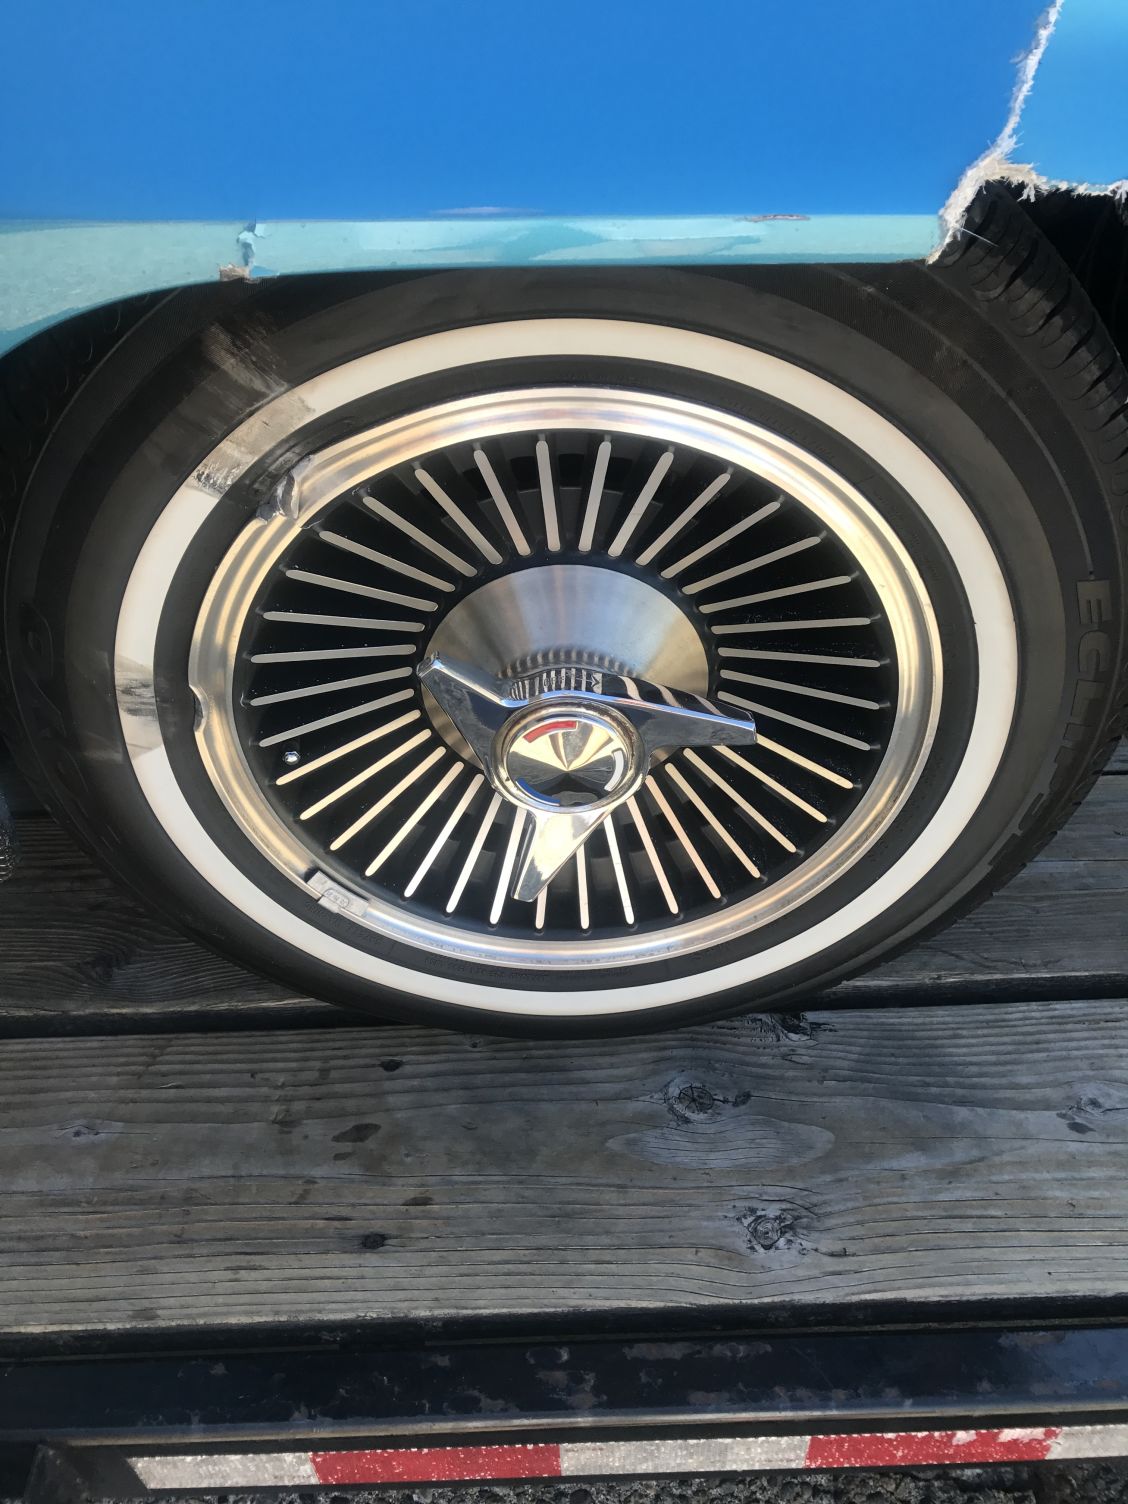 A friend crashed this owner's classic C2 Corvette.